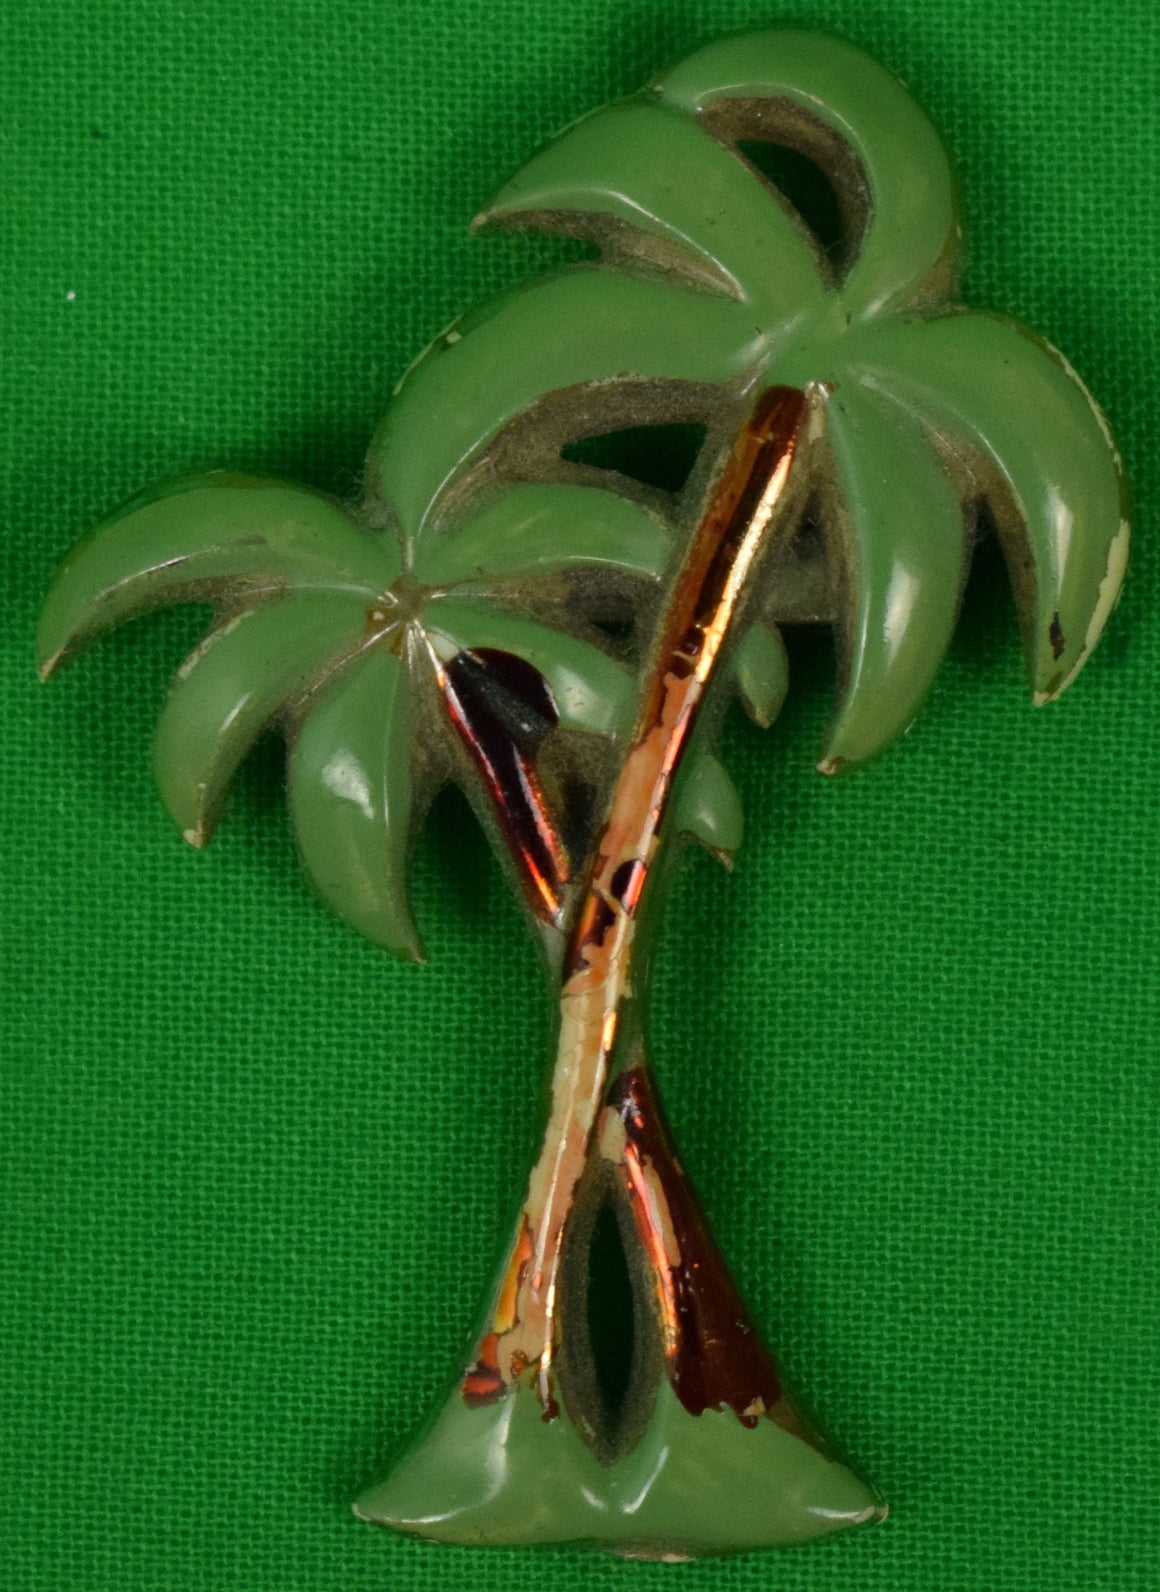 Palm Tree Brooch